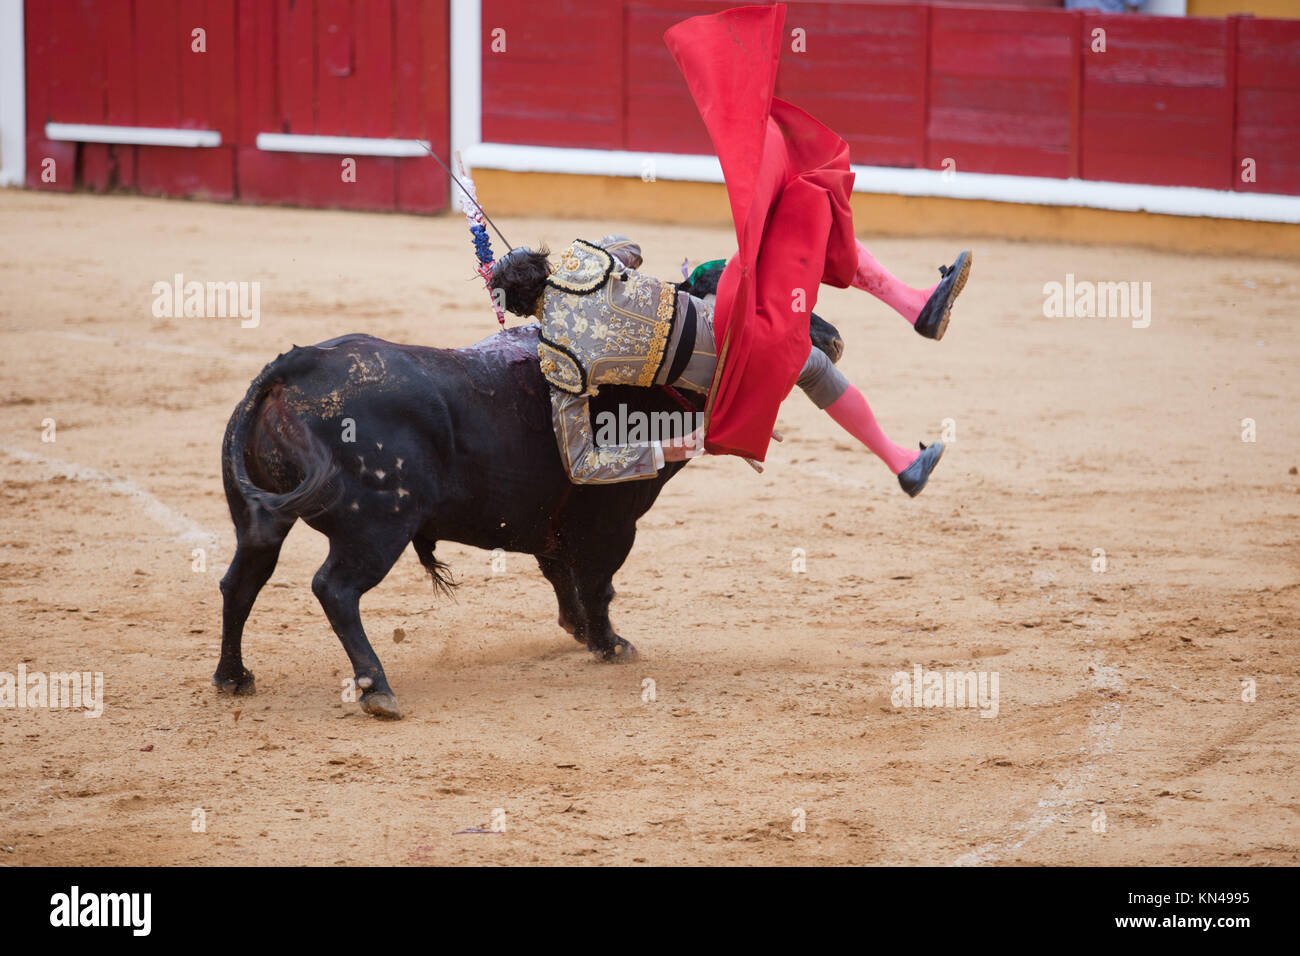 El torero ha rotado por la poderosa cabeza de toro. Foto de stock